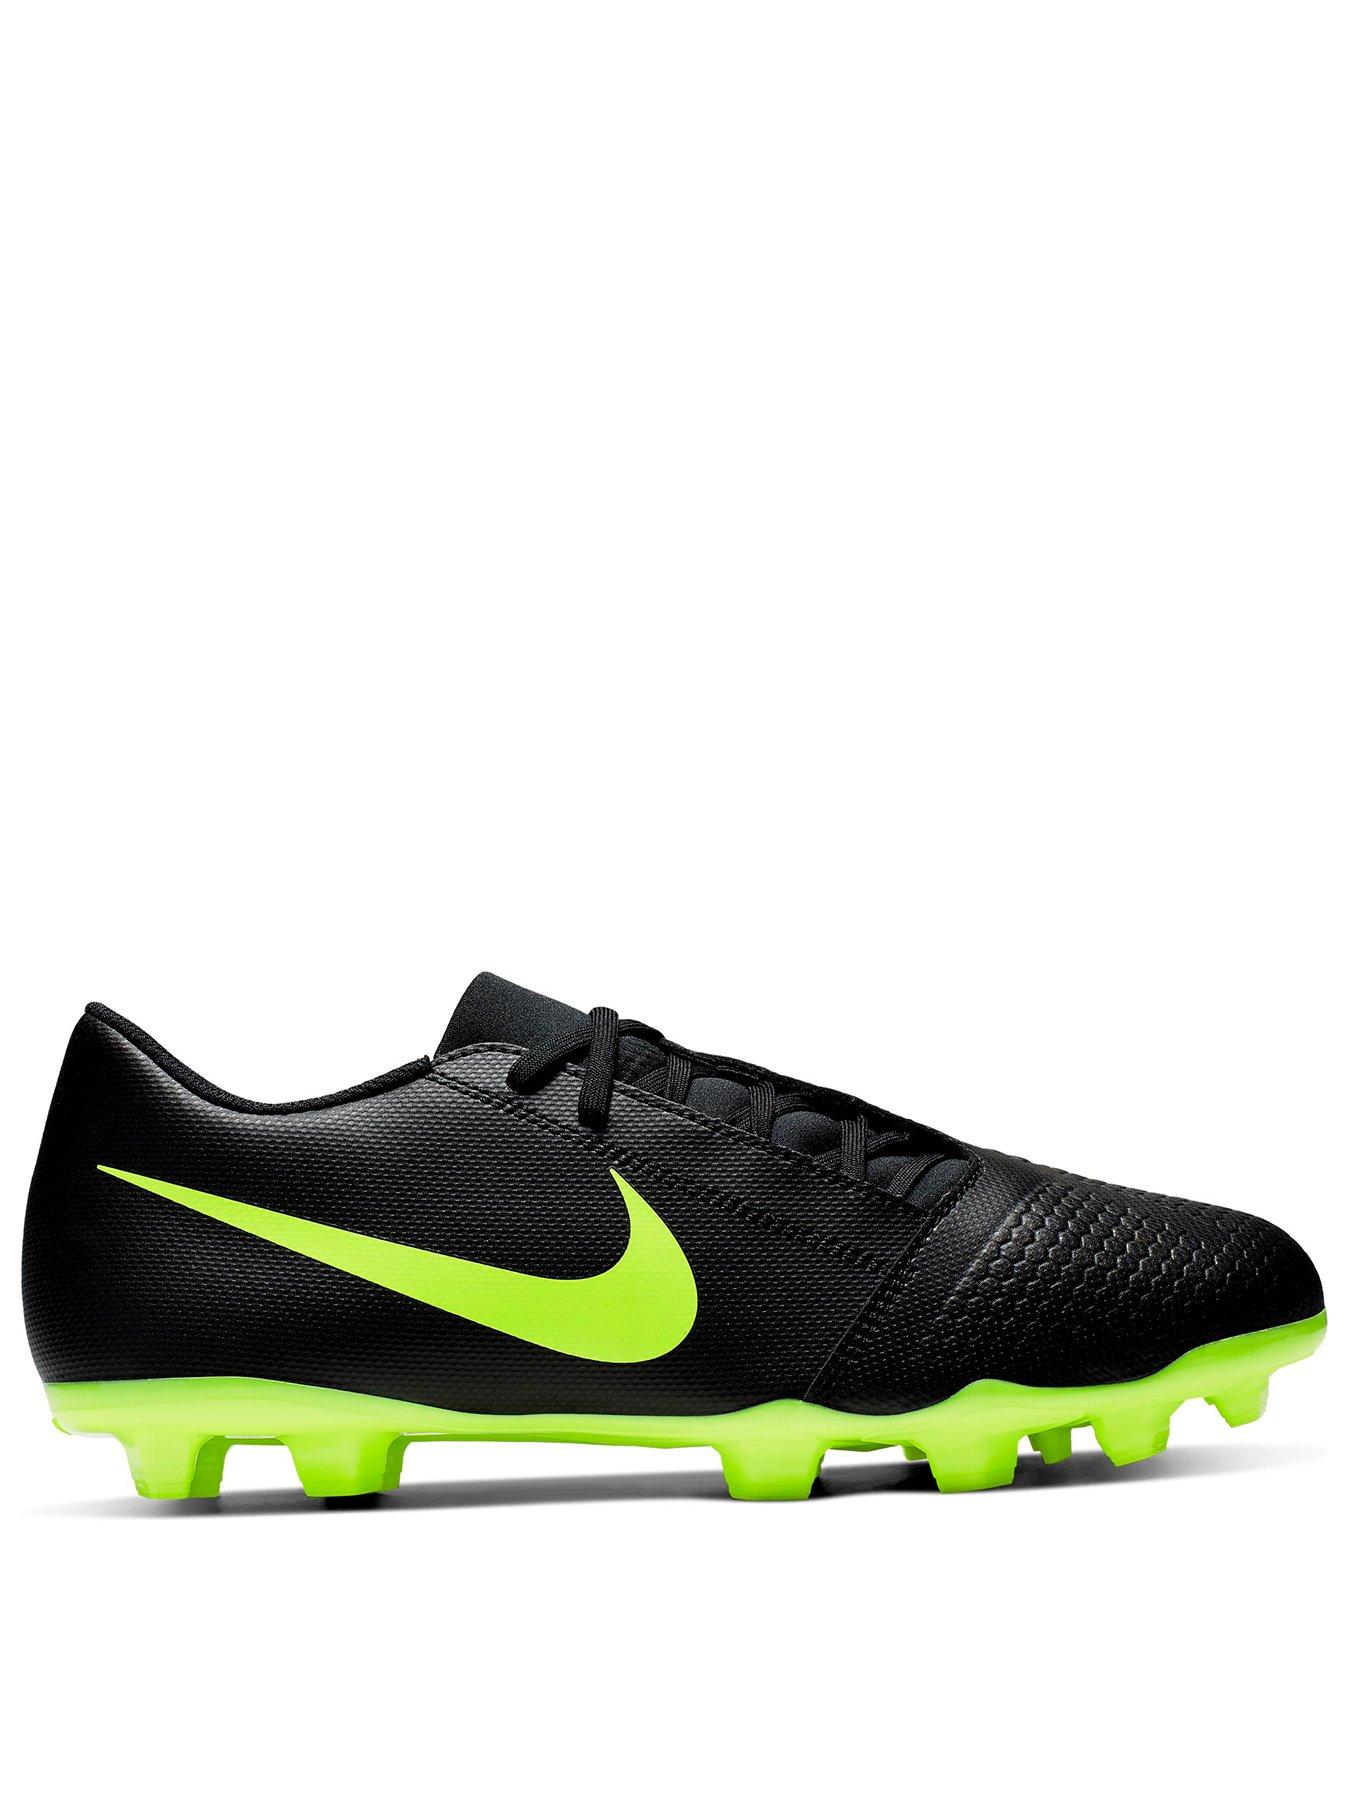 Nike hypervenom phantom FG mens football boots 